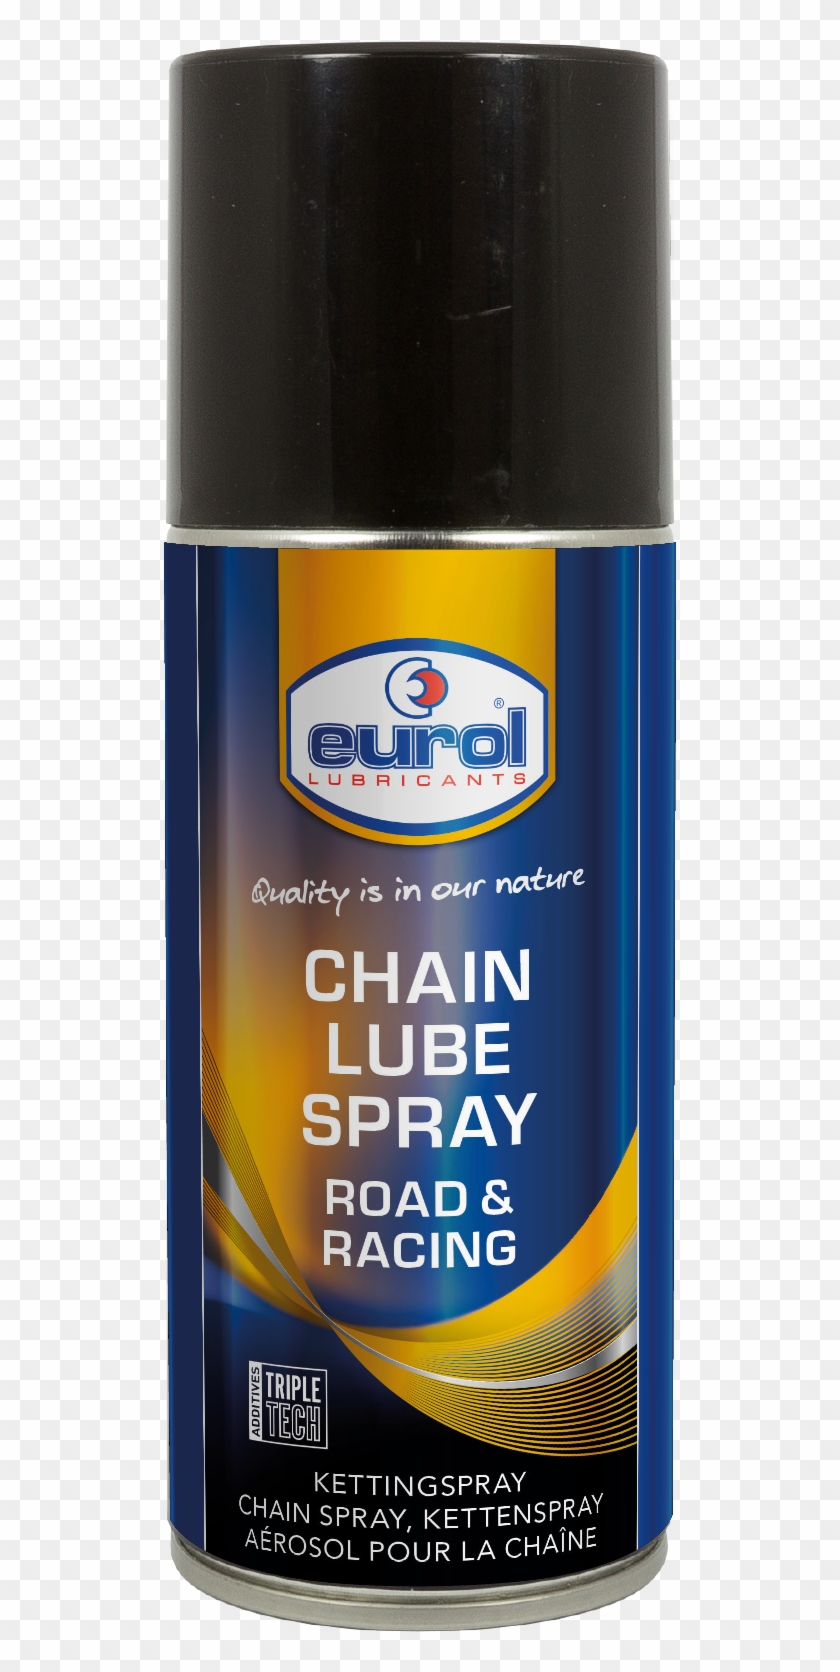 Eurol Chain Lube Spray Road & Racing 100ml - Bottle Clipart #4704065